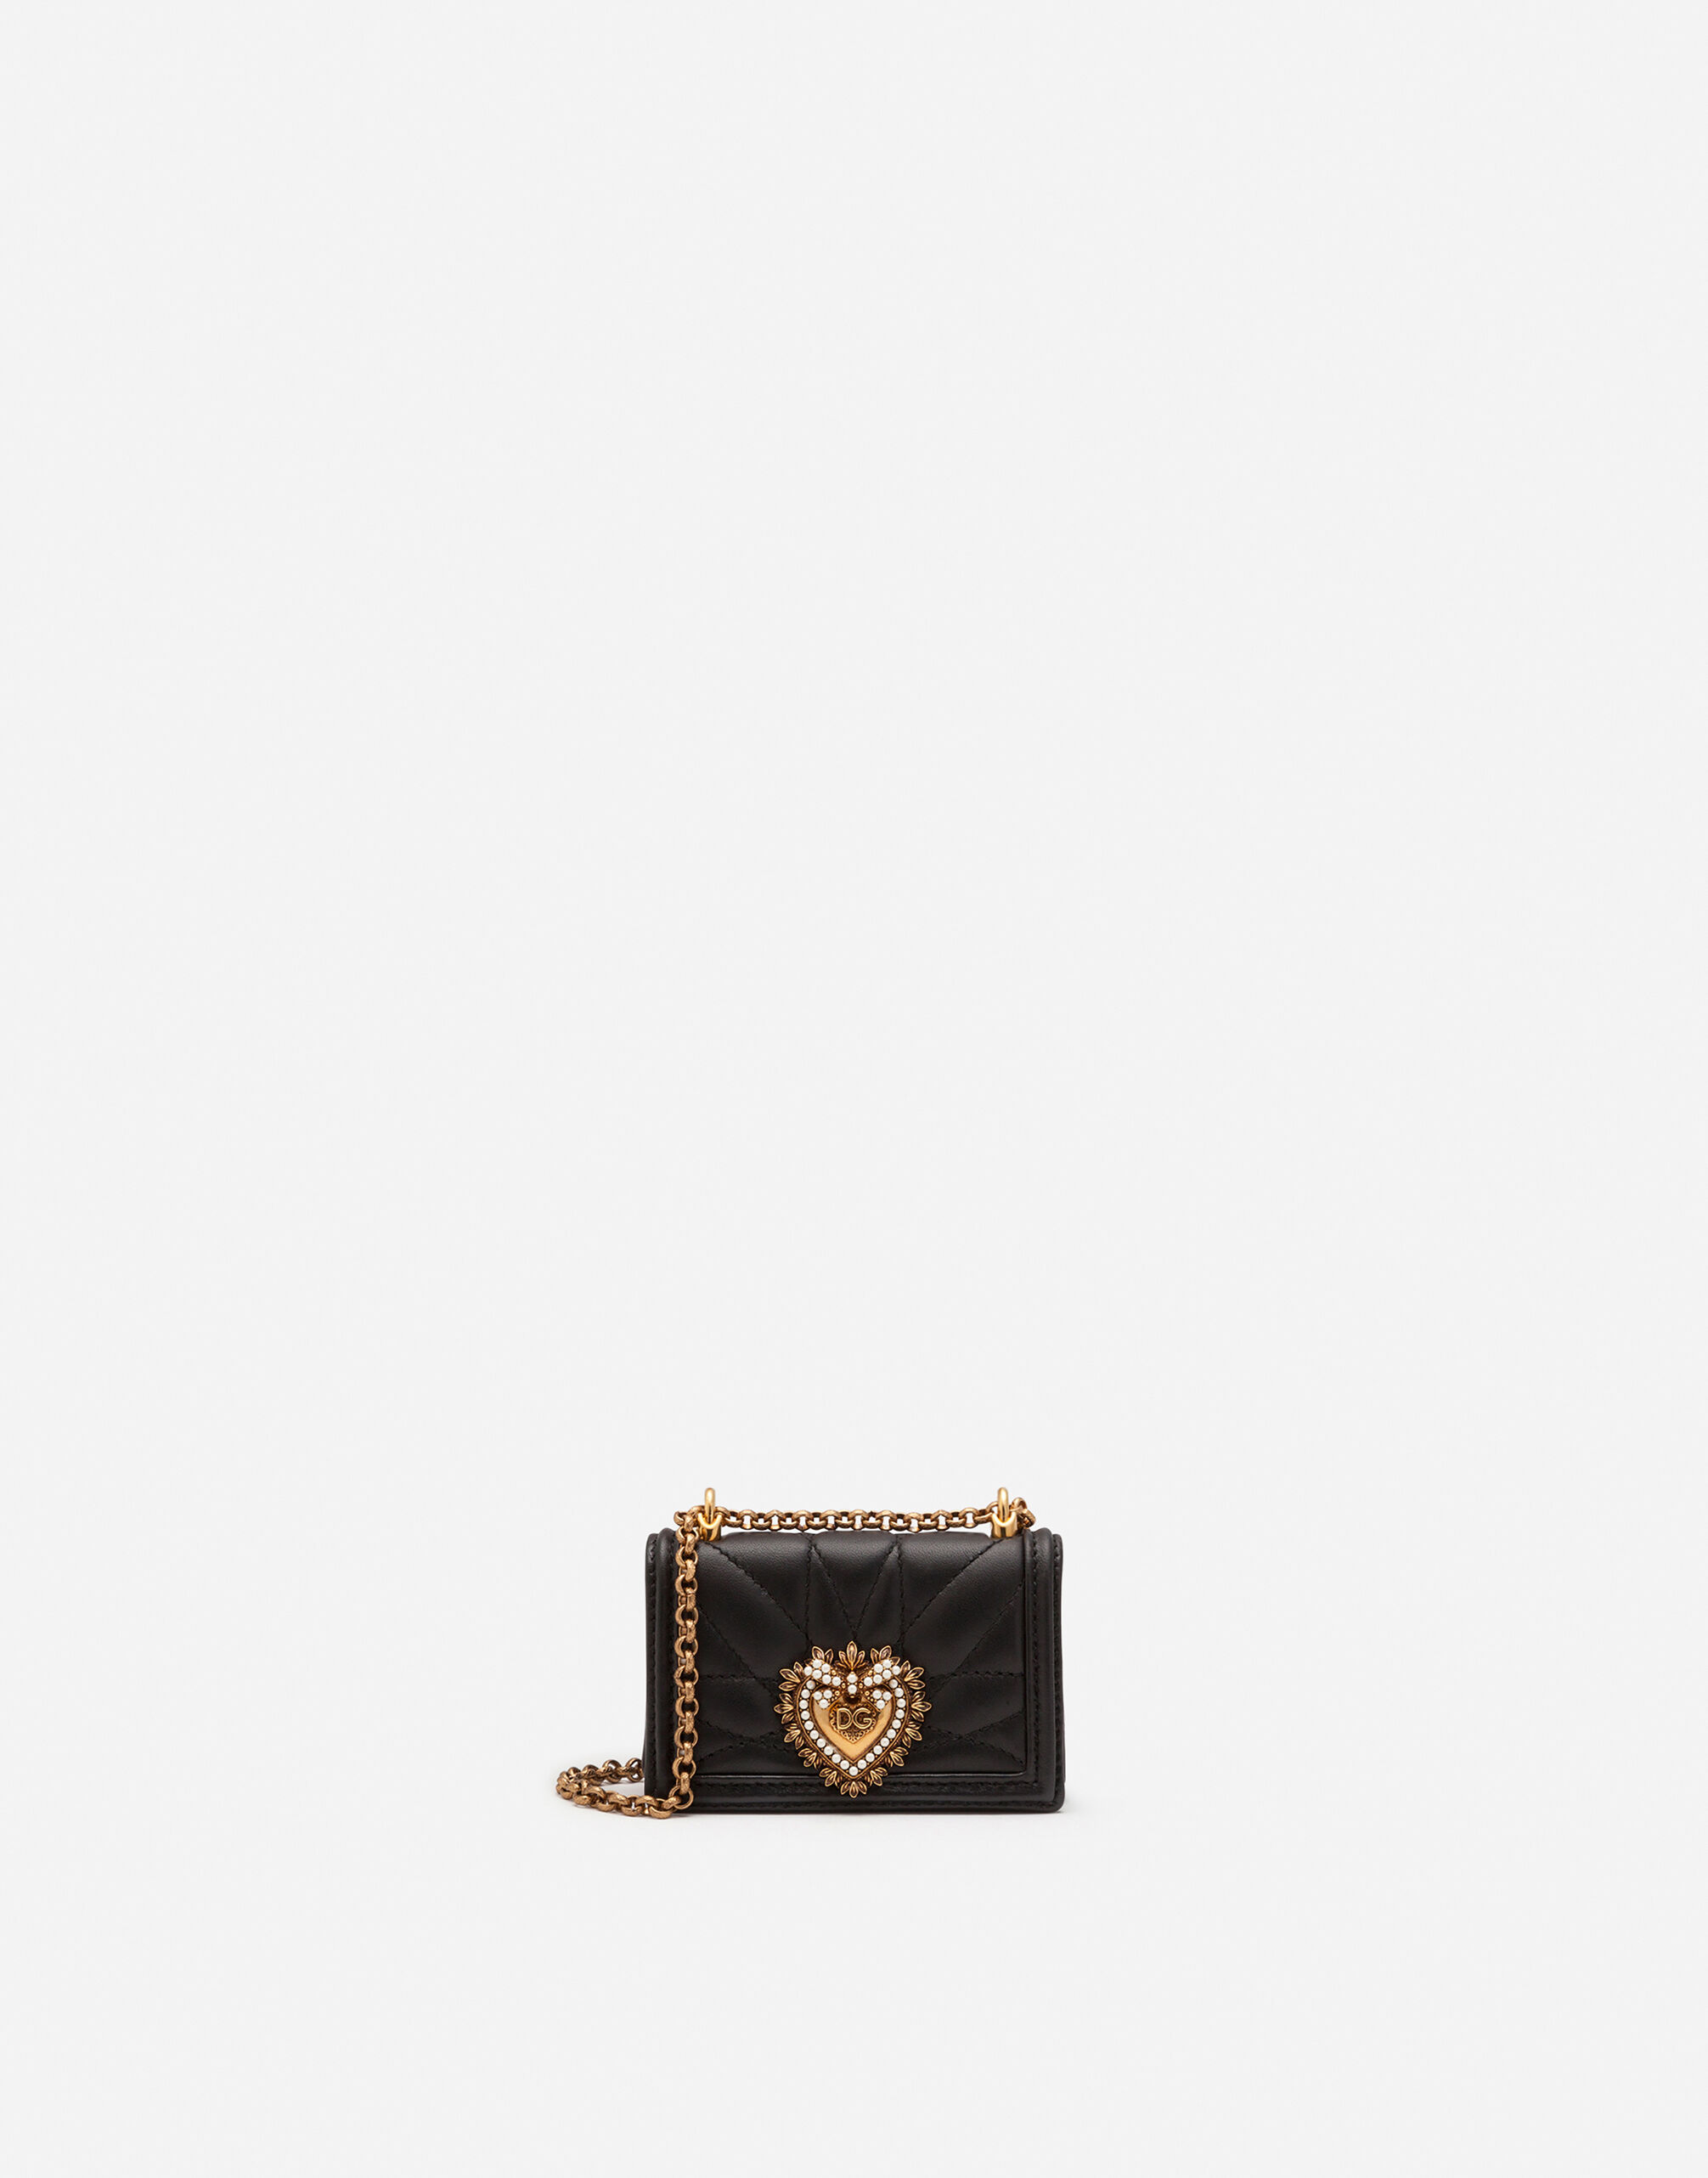 Dolce & Gabbana DEVOTION マイクロバッグ マトラッセナッパレザー ピンク BB6003A1001